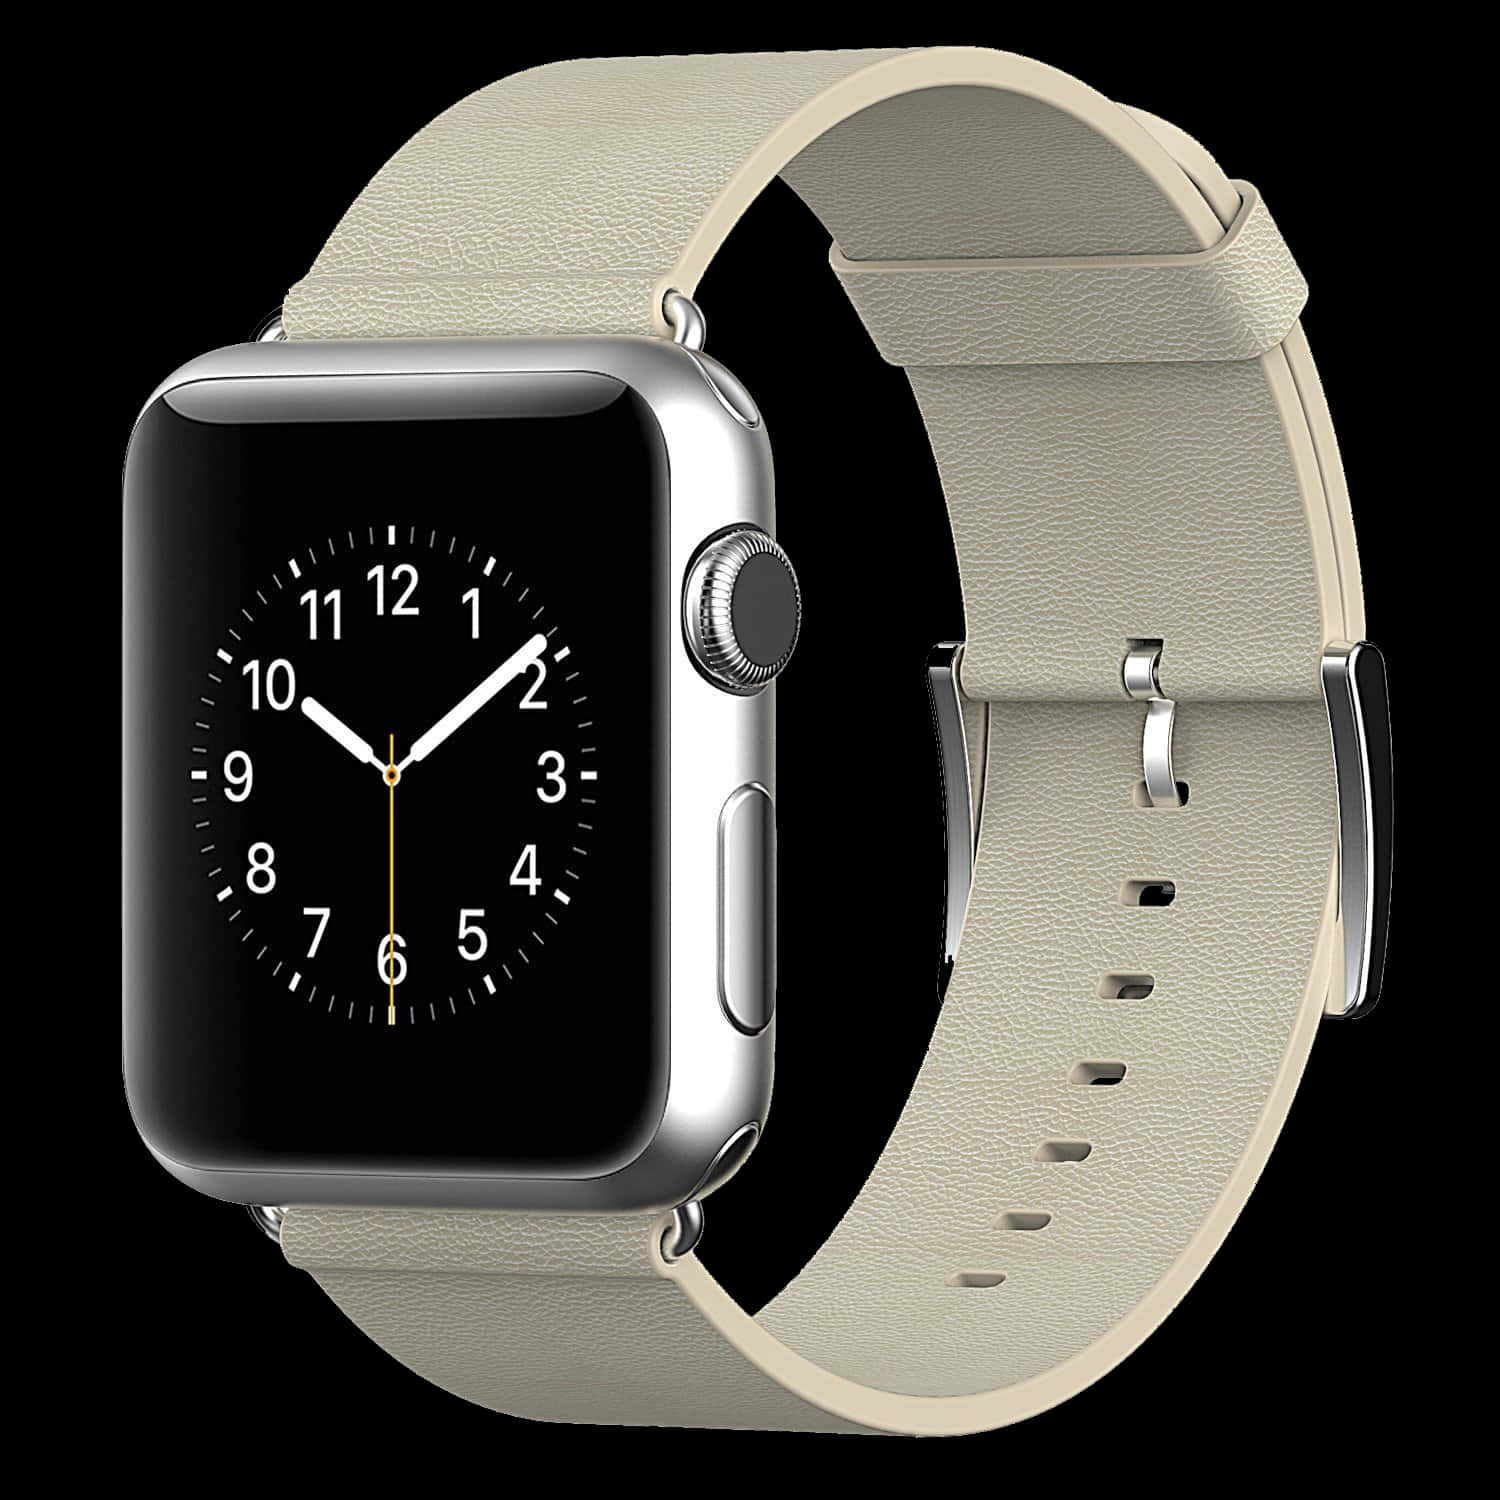 Overskrid trenden med Apple Watch, verdens mest innovative bærbare enhed.